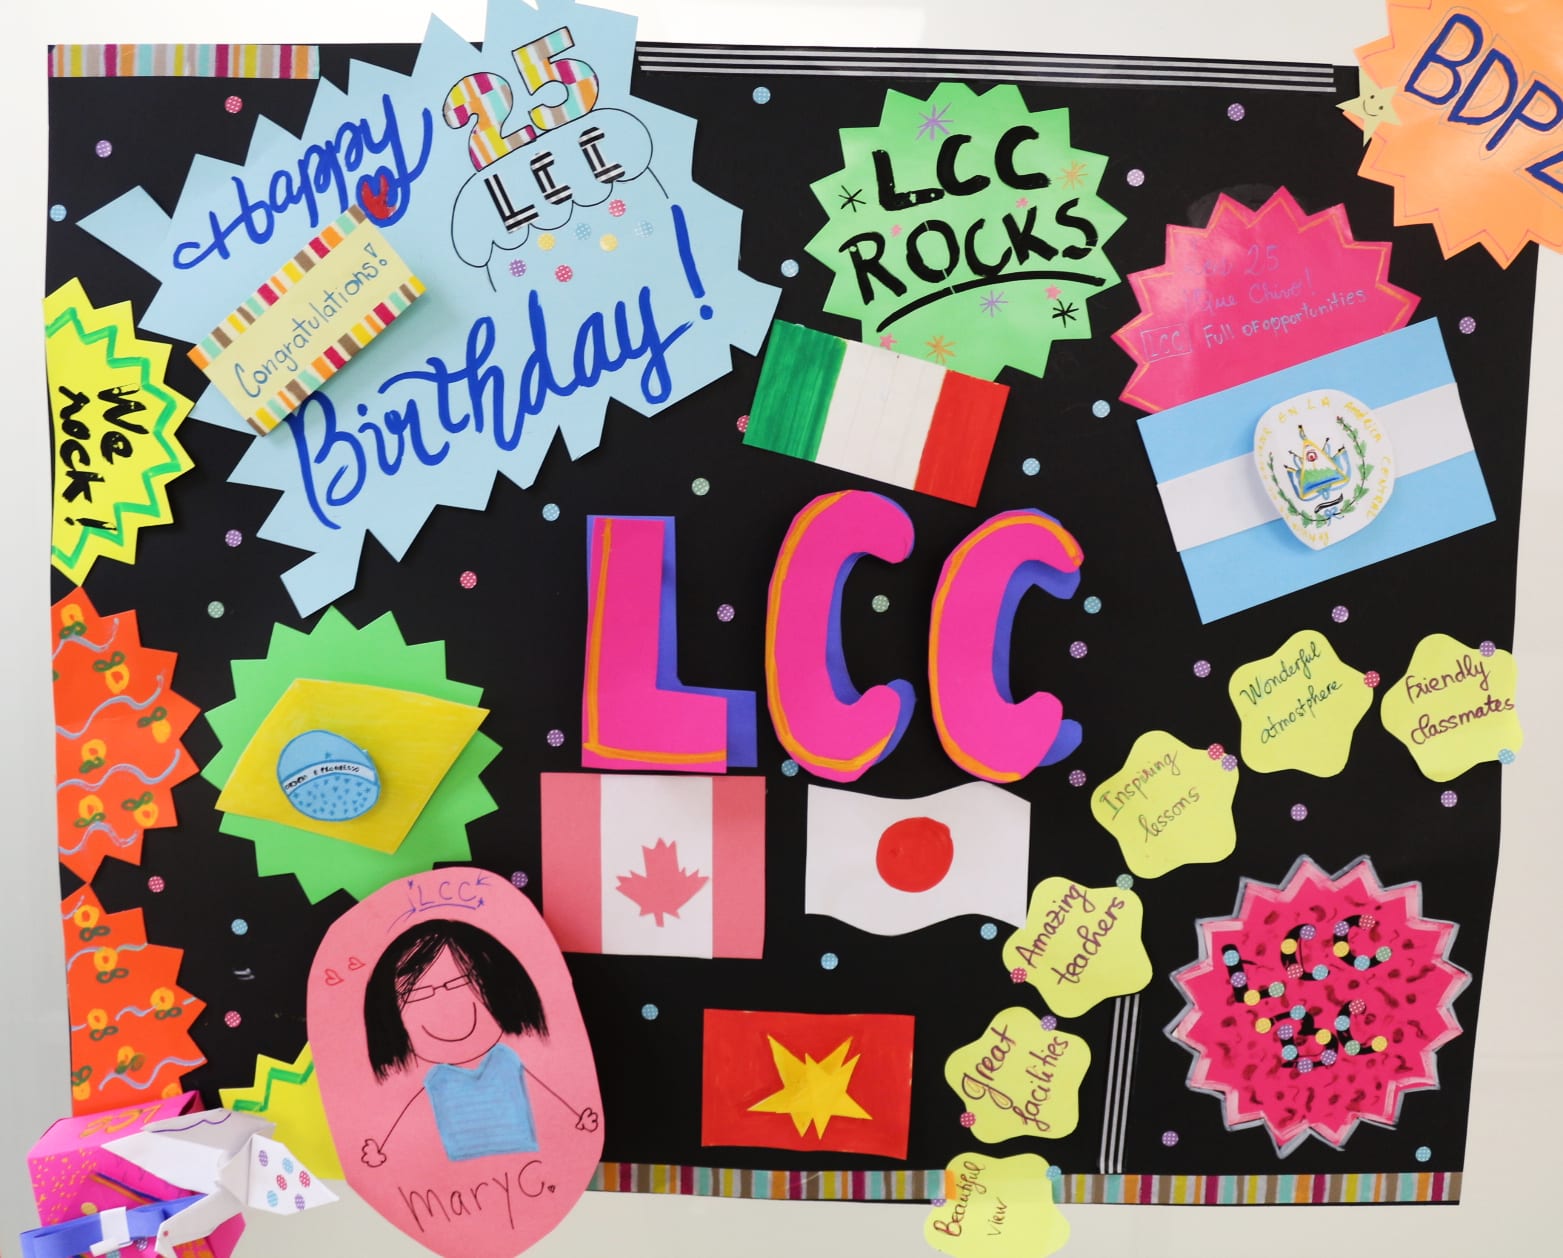 LCC celebrates its 25th anniversary!